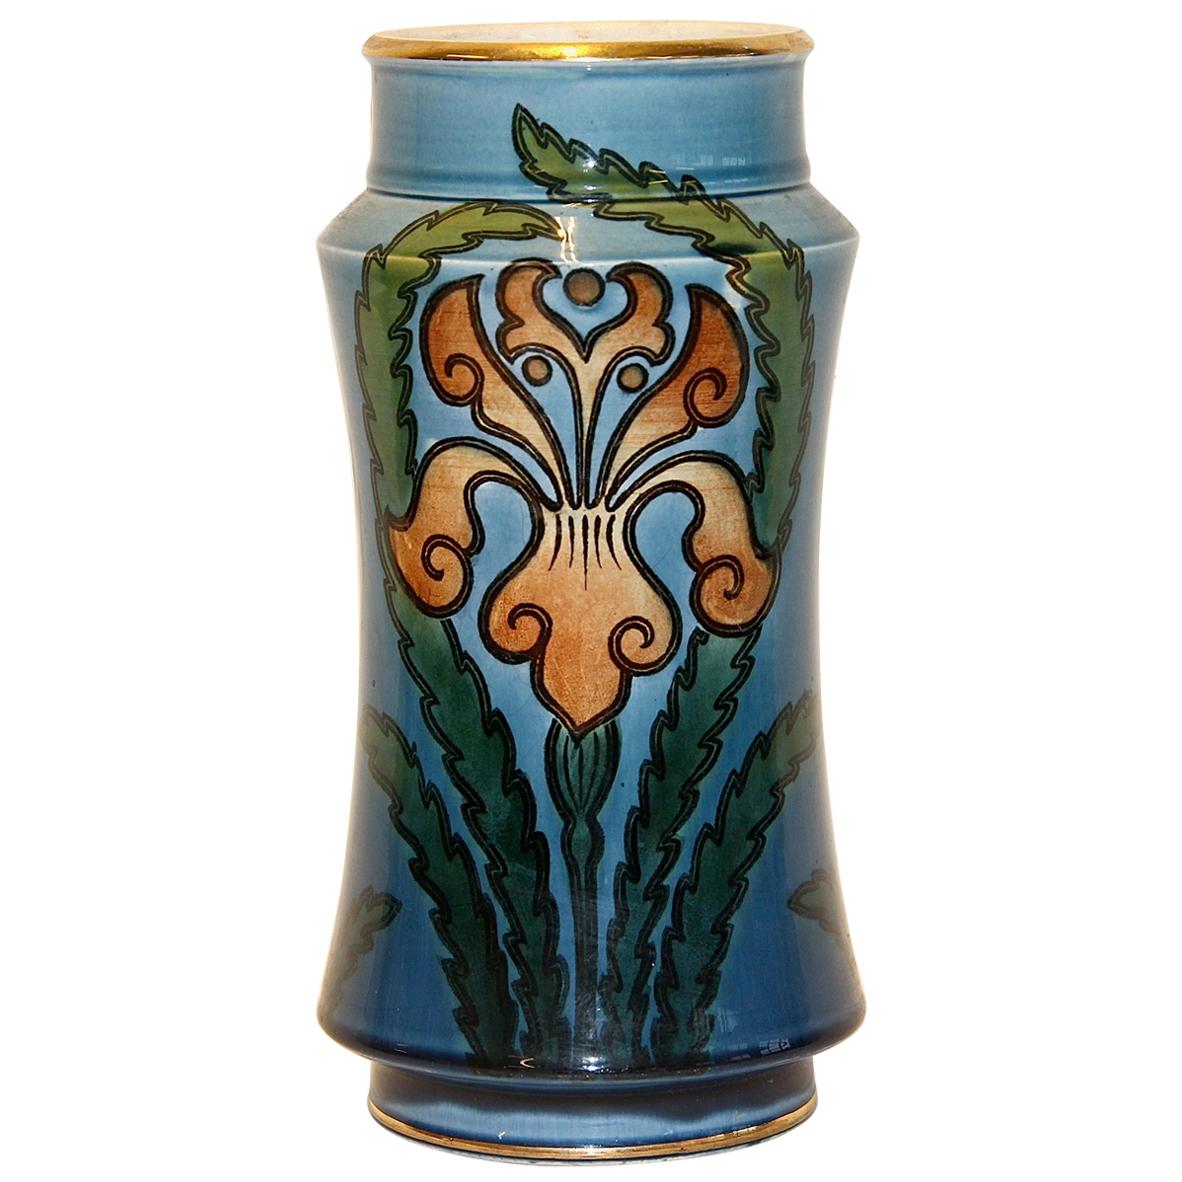 Decorative Art Nouveau Ceramic Vase, Vessel by Villeroy & Boch, Mettlach